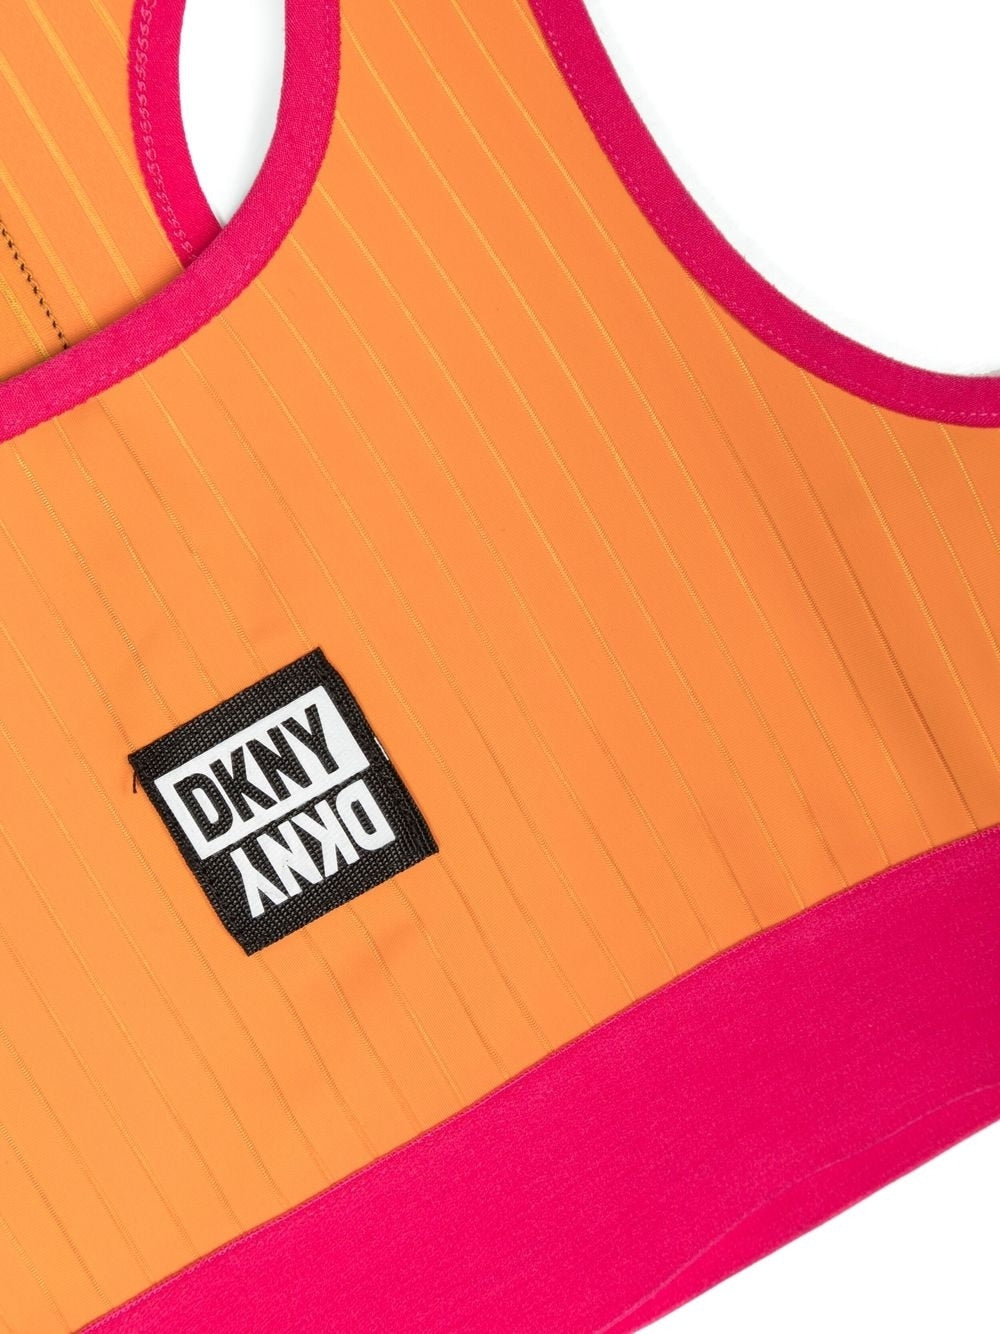 Dkny Kids pinstripe logo patch cropped undershirt